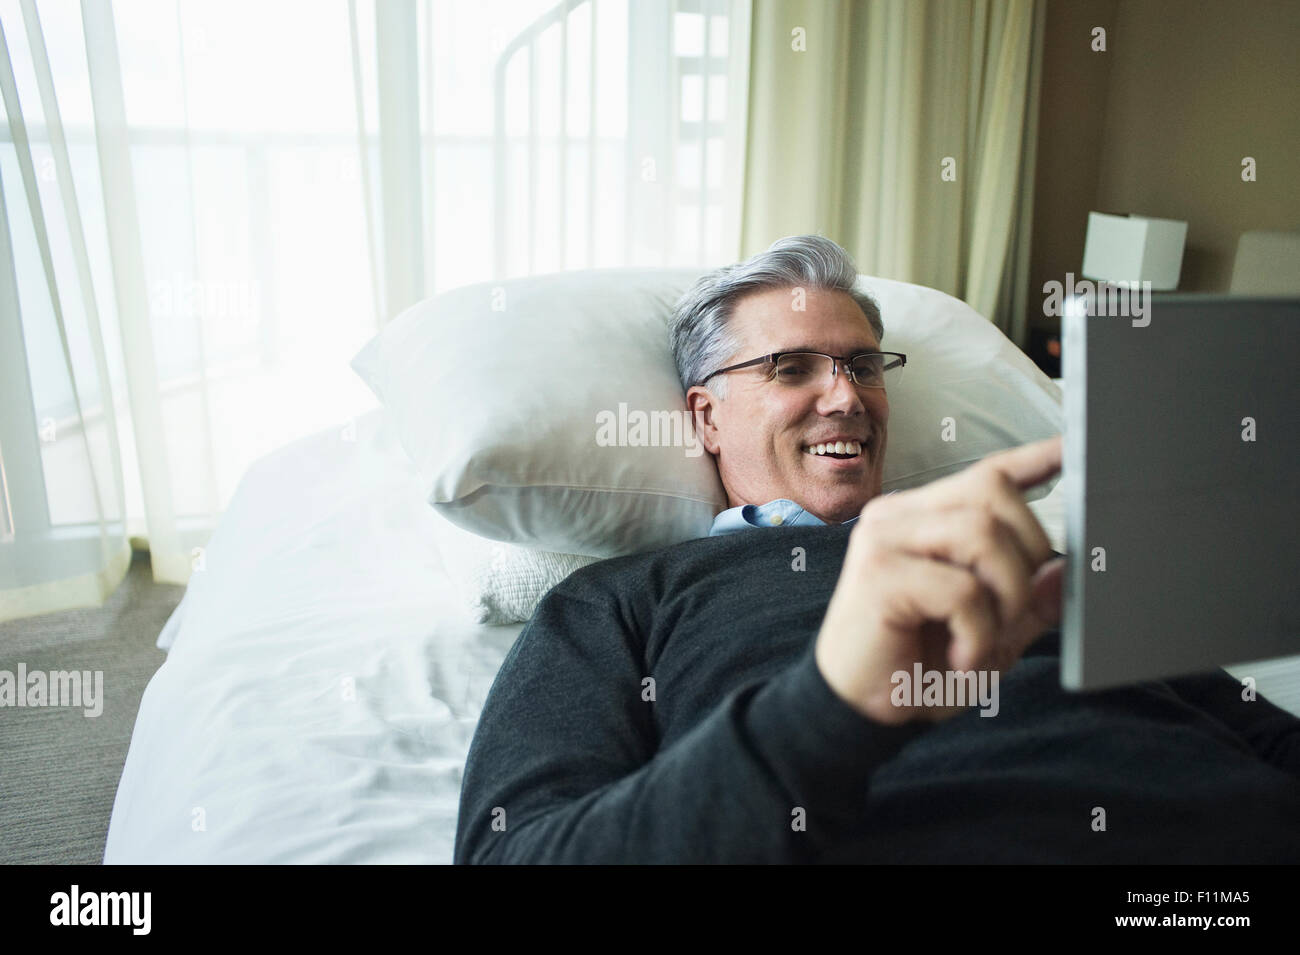 Caucasian man using digital tablet in bed Stock Photo